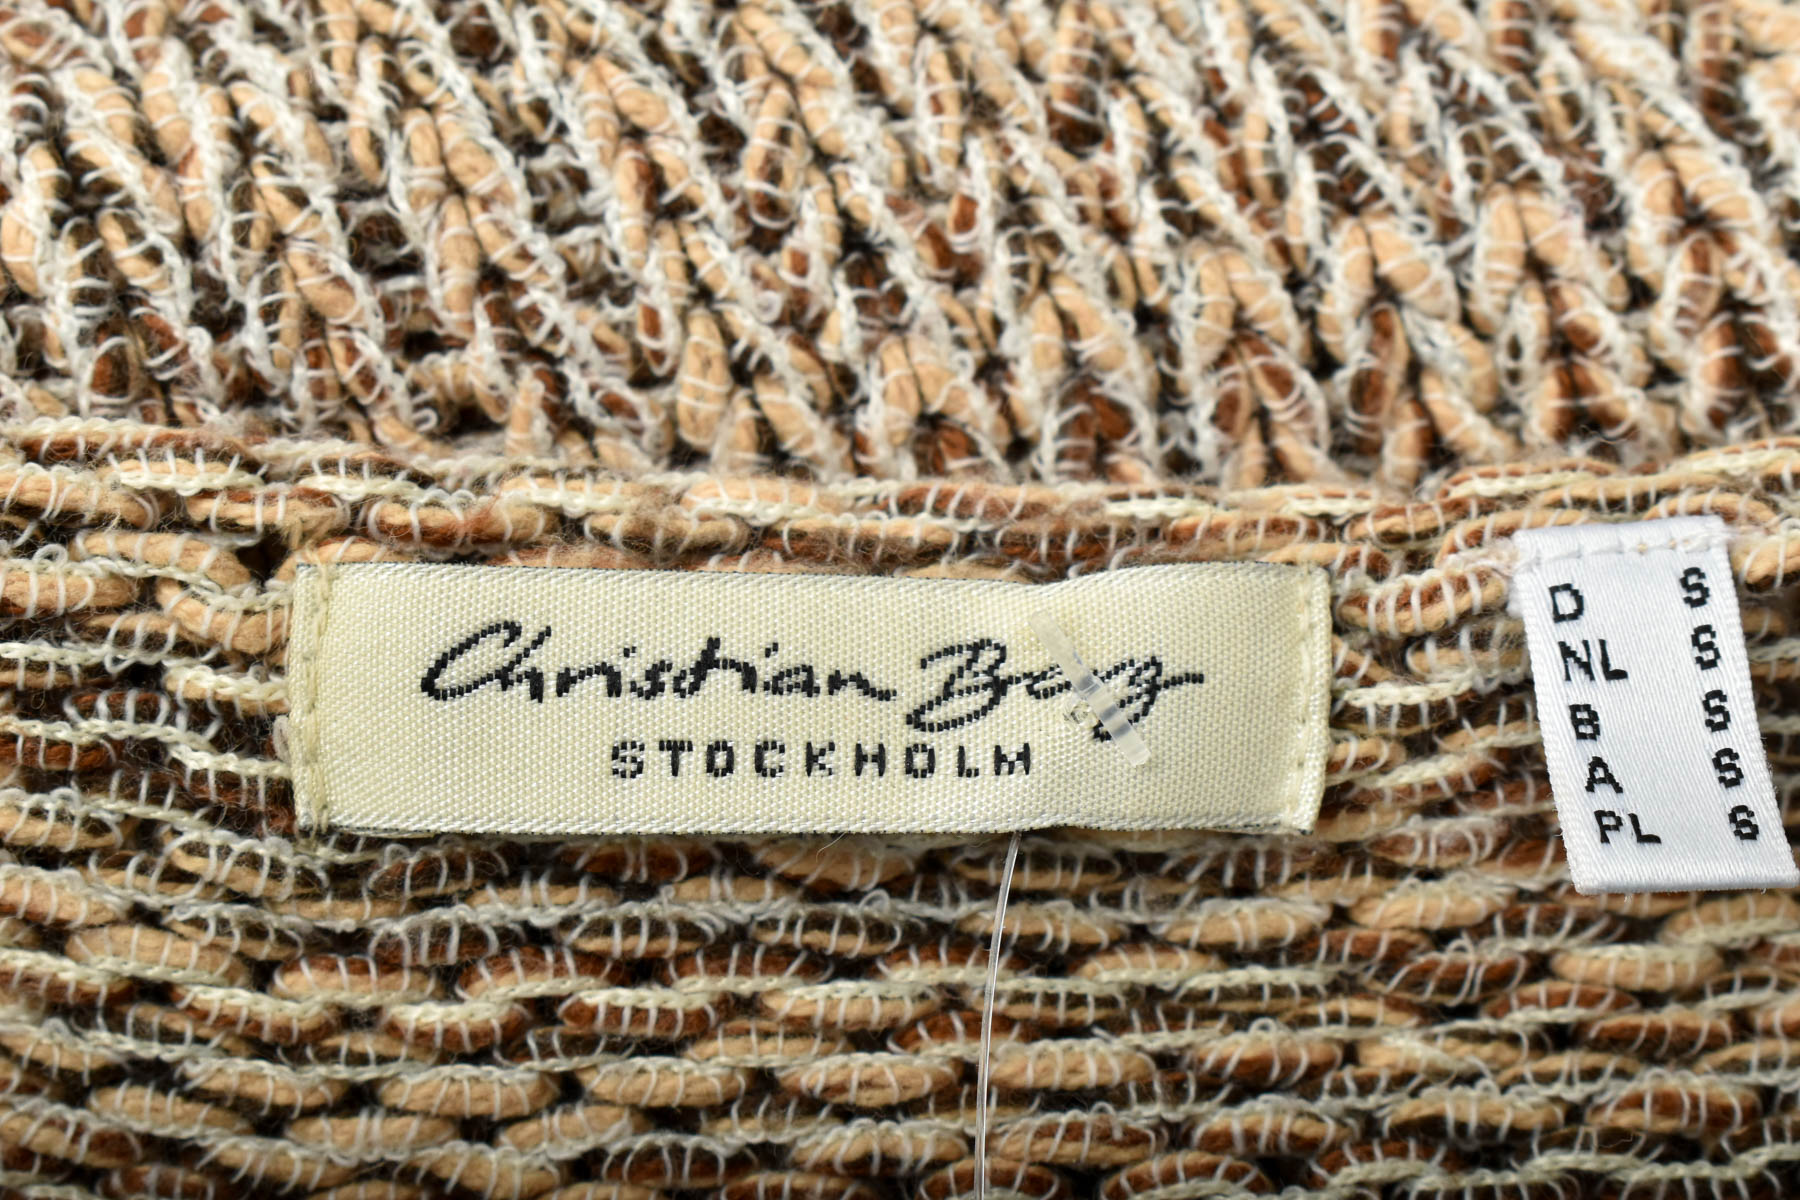 Women's sweater - Christian Berg - 2